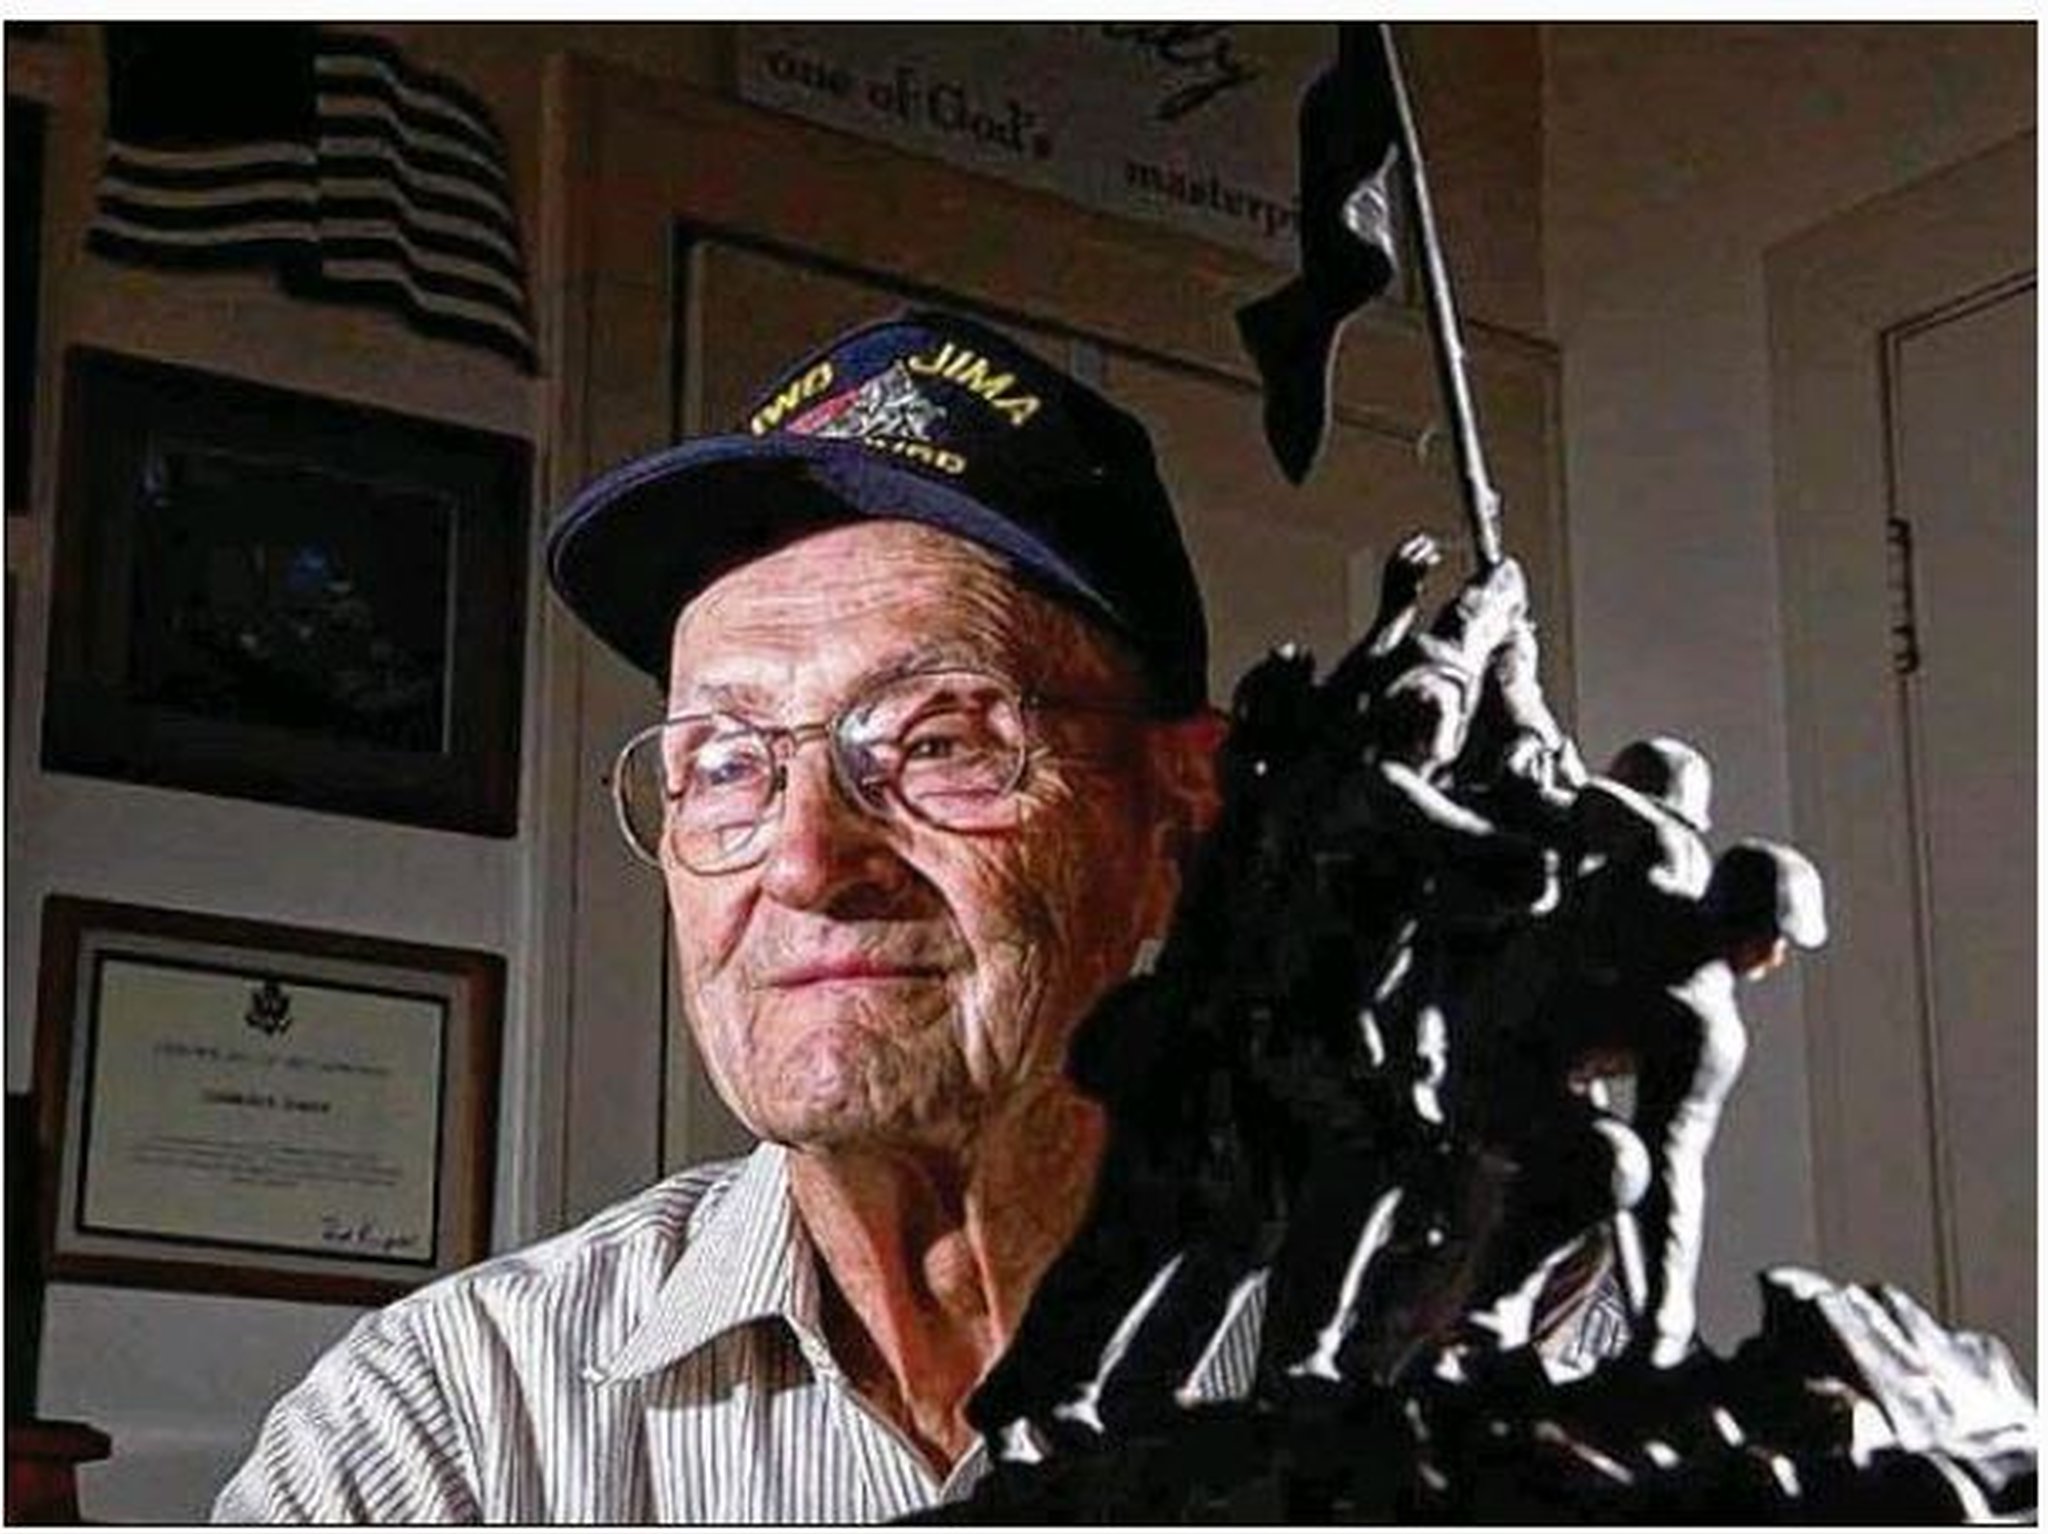 Local WWII war hero Charlie Baker has died